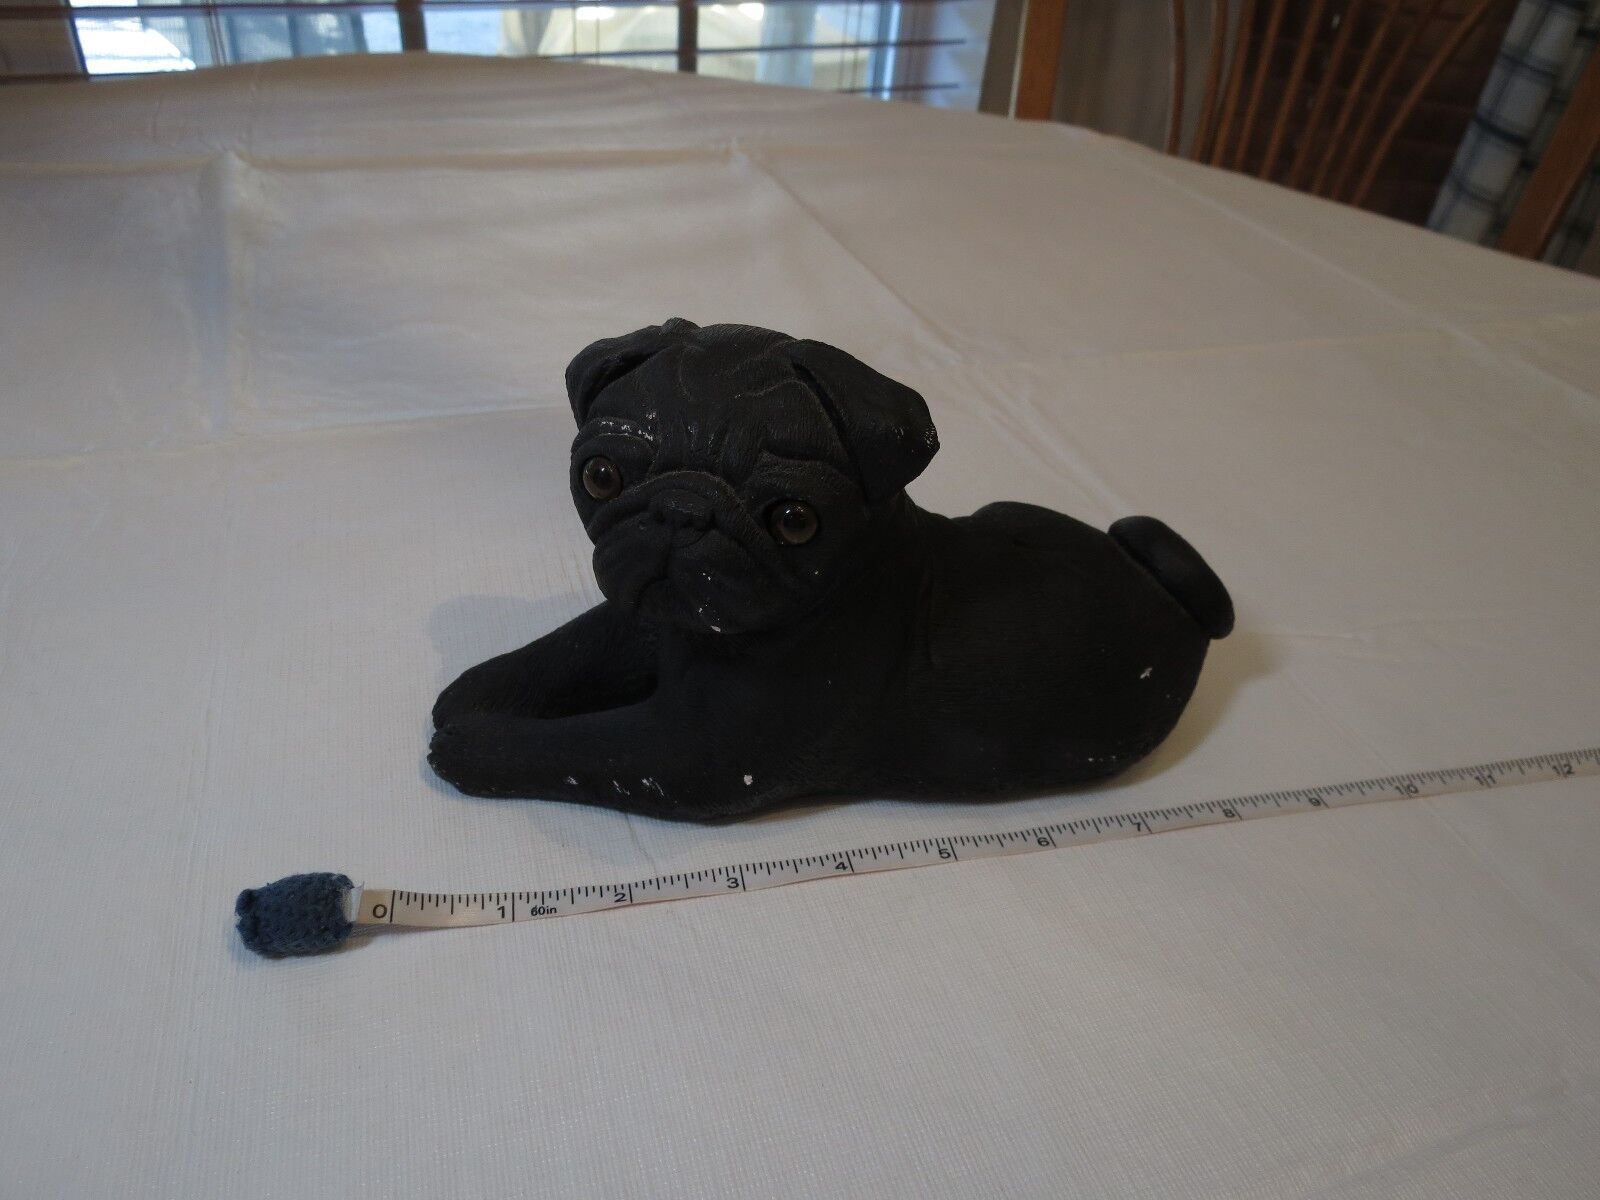 Bandanna 1982 sculptures Black pug vintage resin has damage fi...